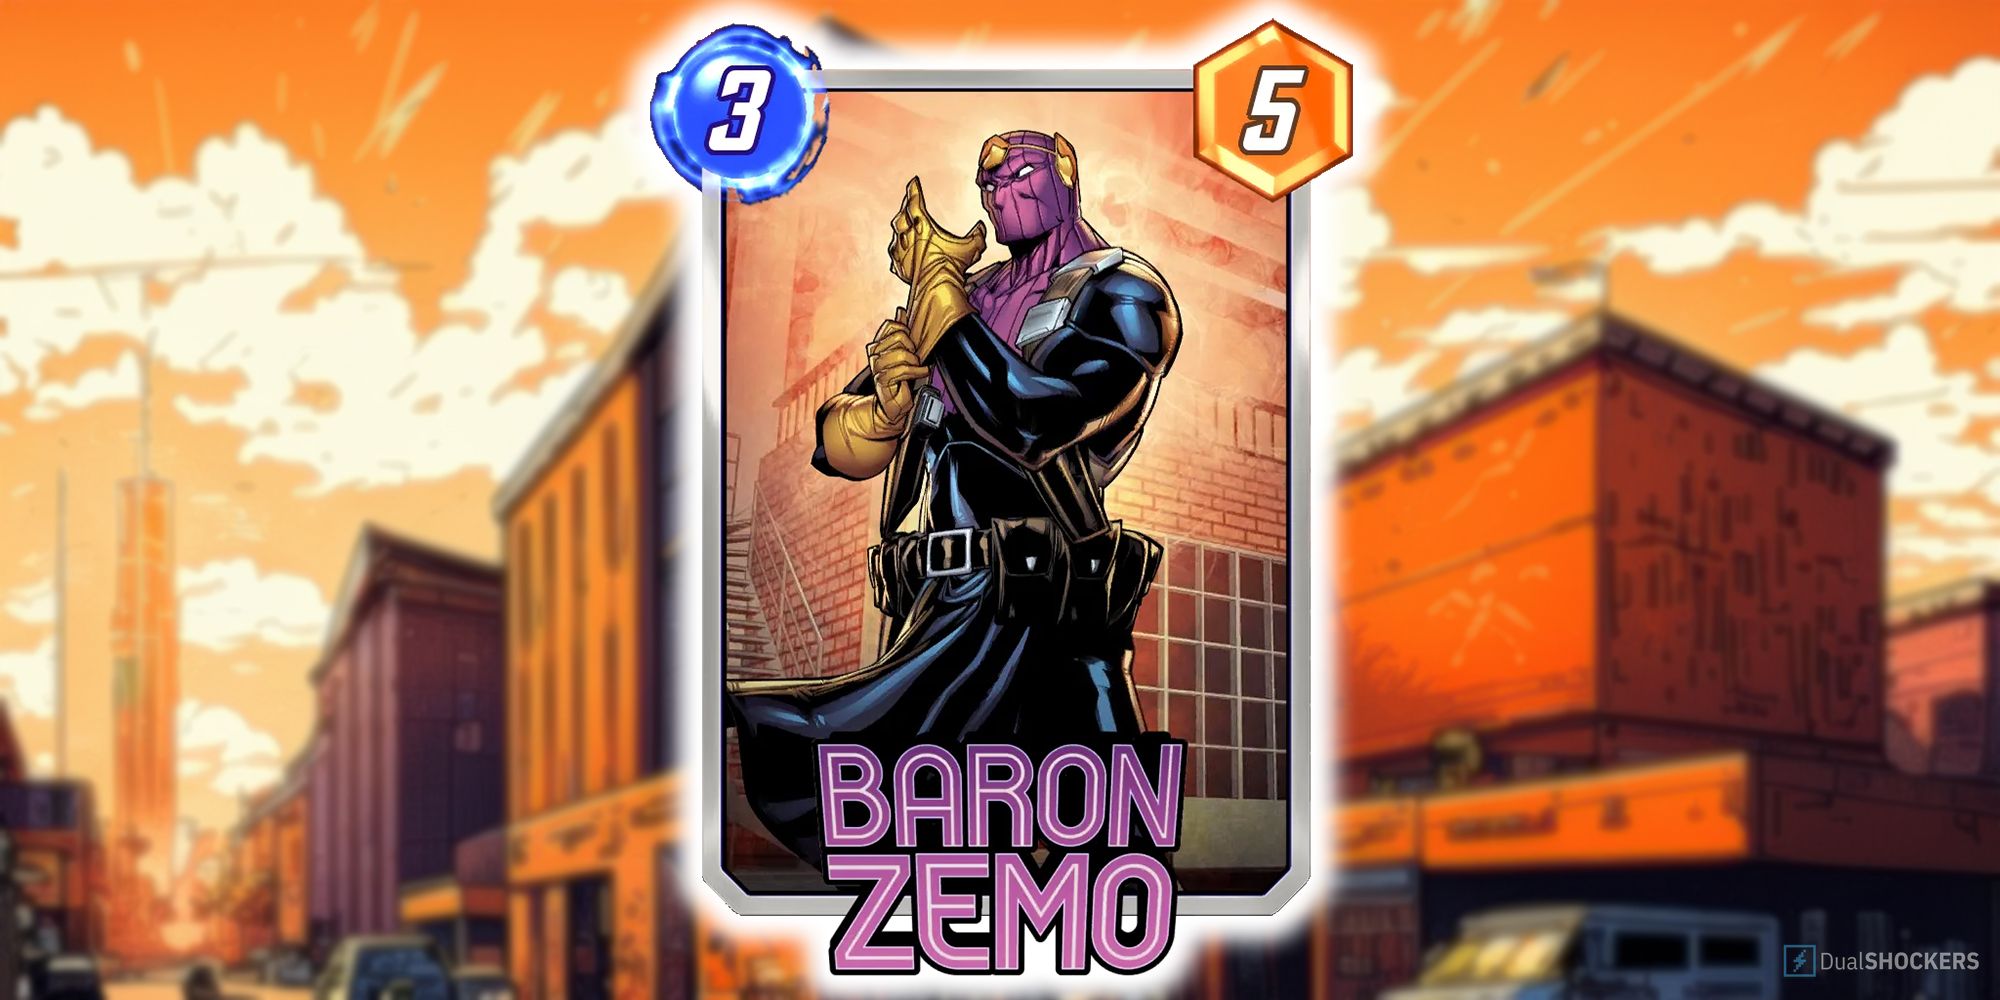 Marvel Snap's Baron Zemo card